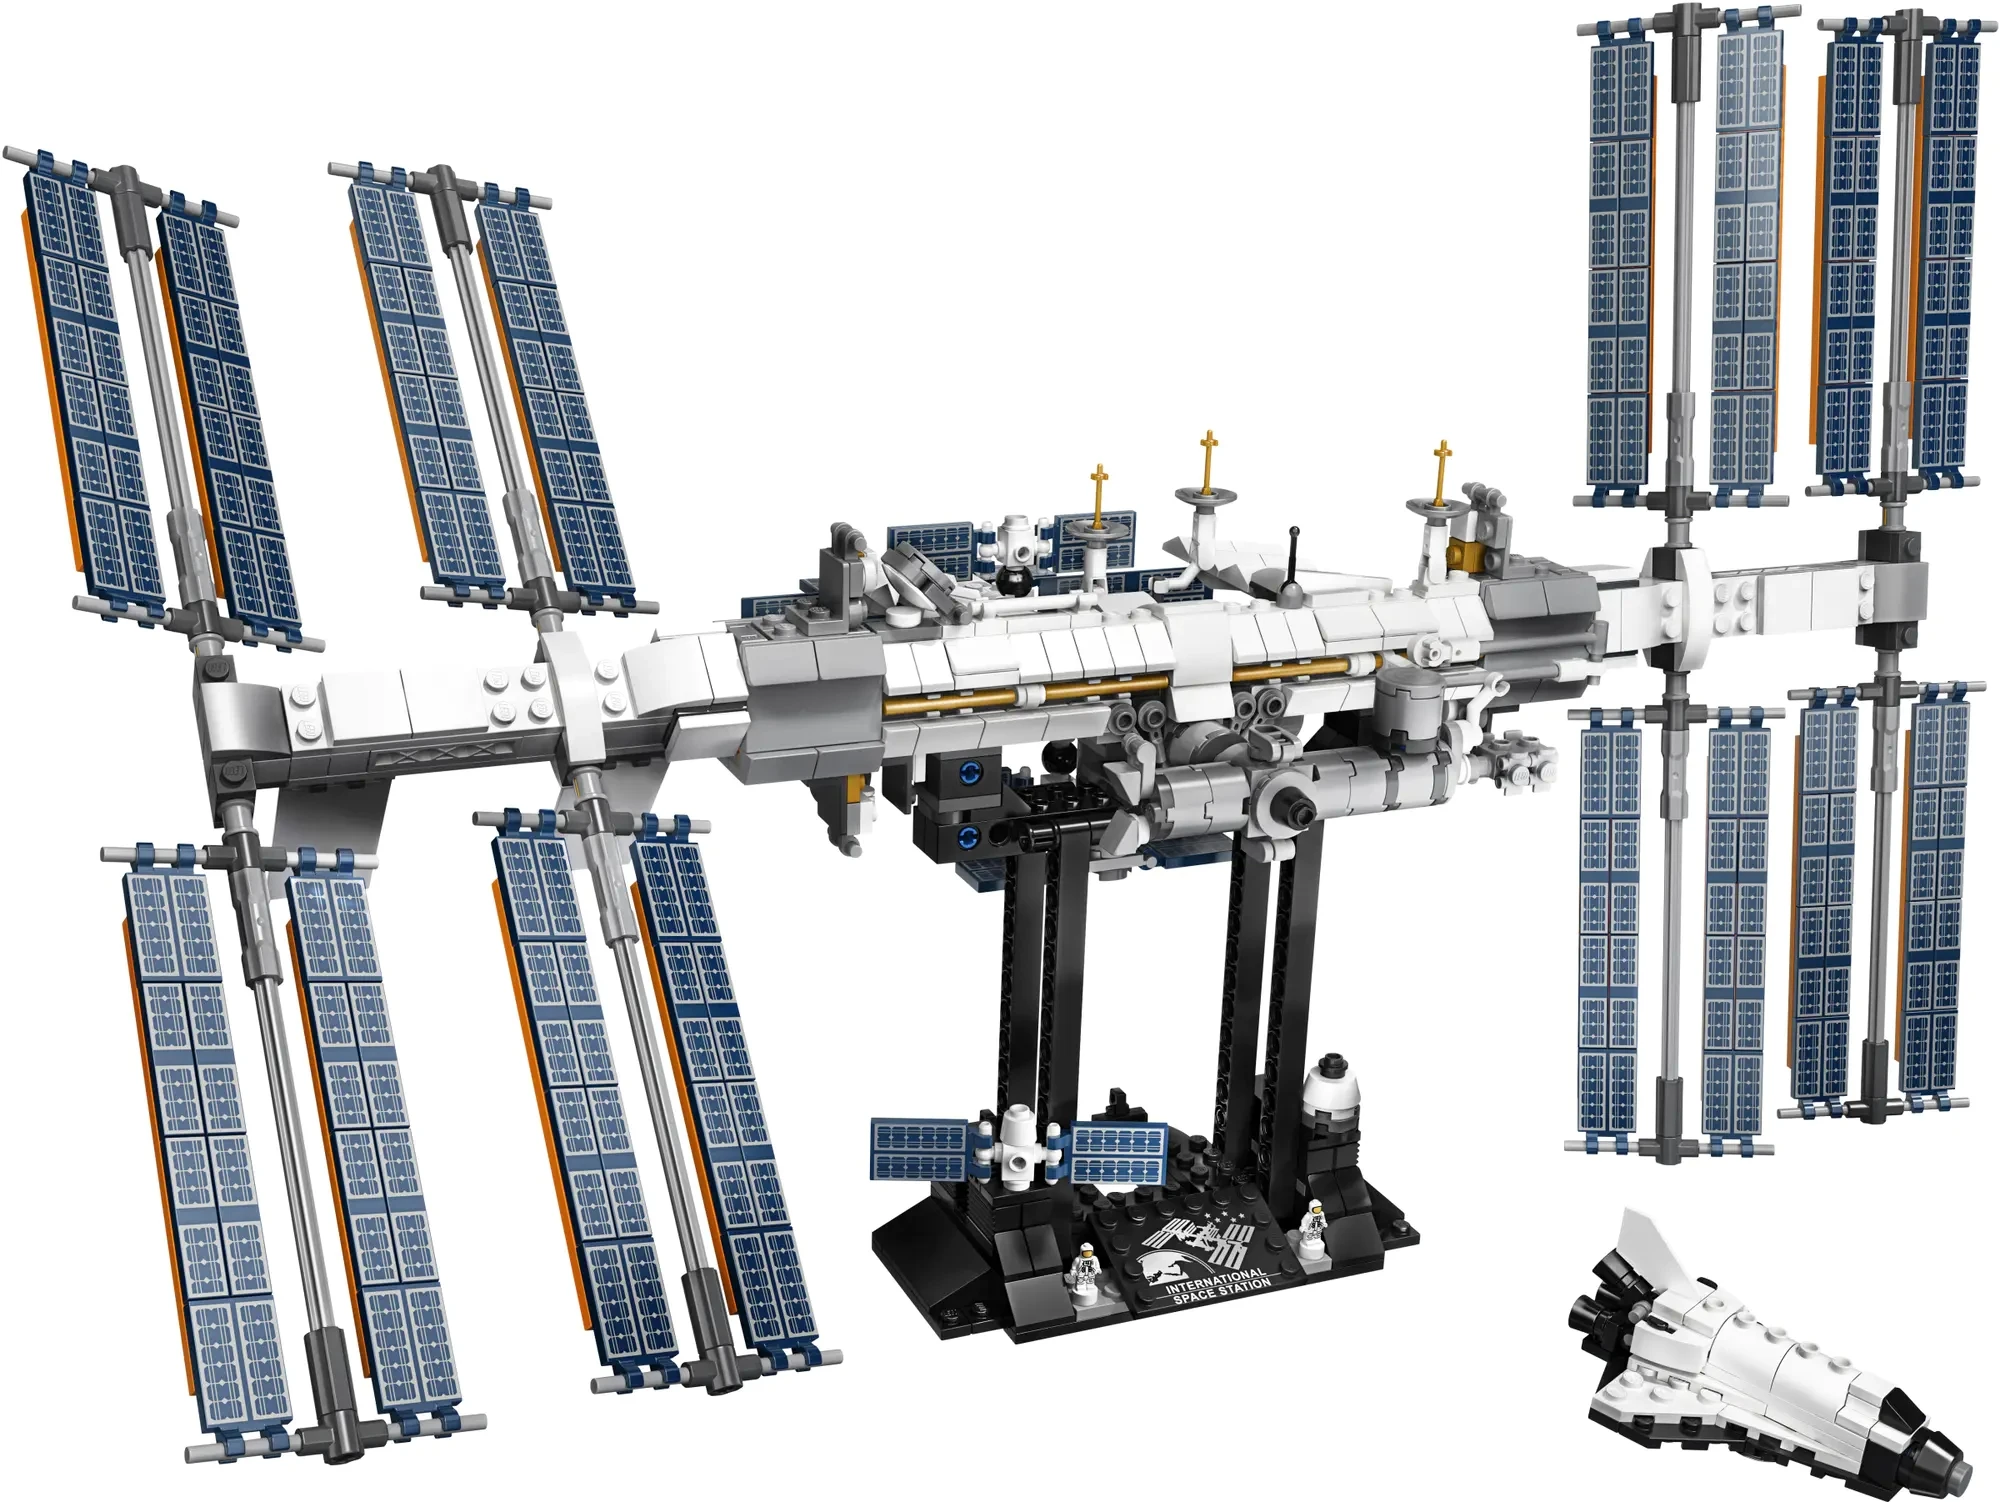 

New 60003 60004 Apollo 11 Lunar Lander And International Space Station Building Blocks Bricks 21321 Toys For Children Boy's Gift